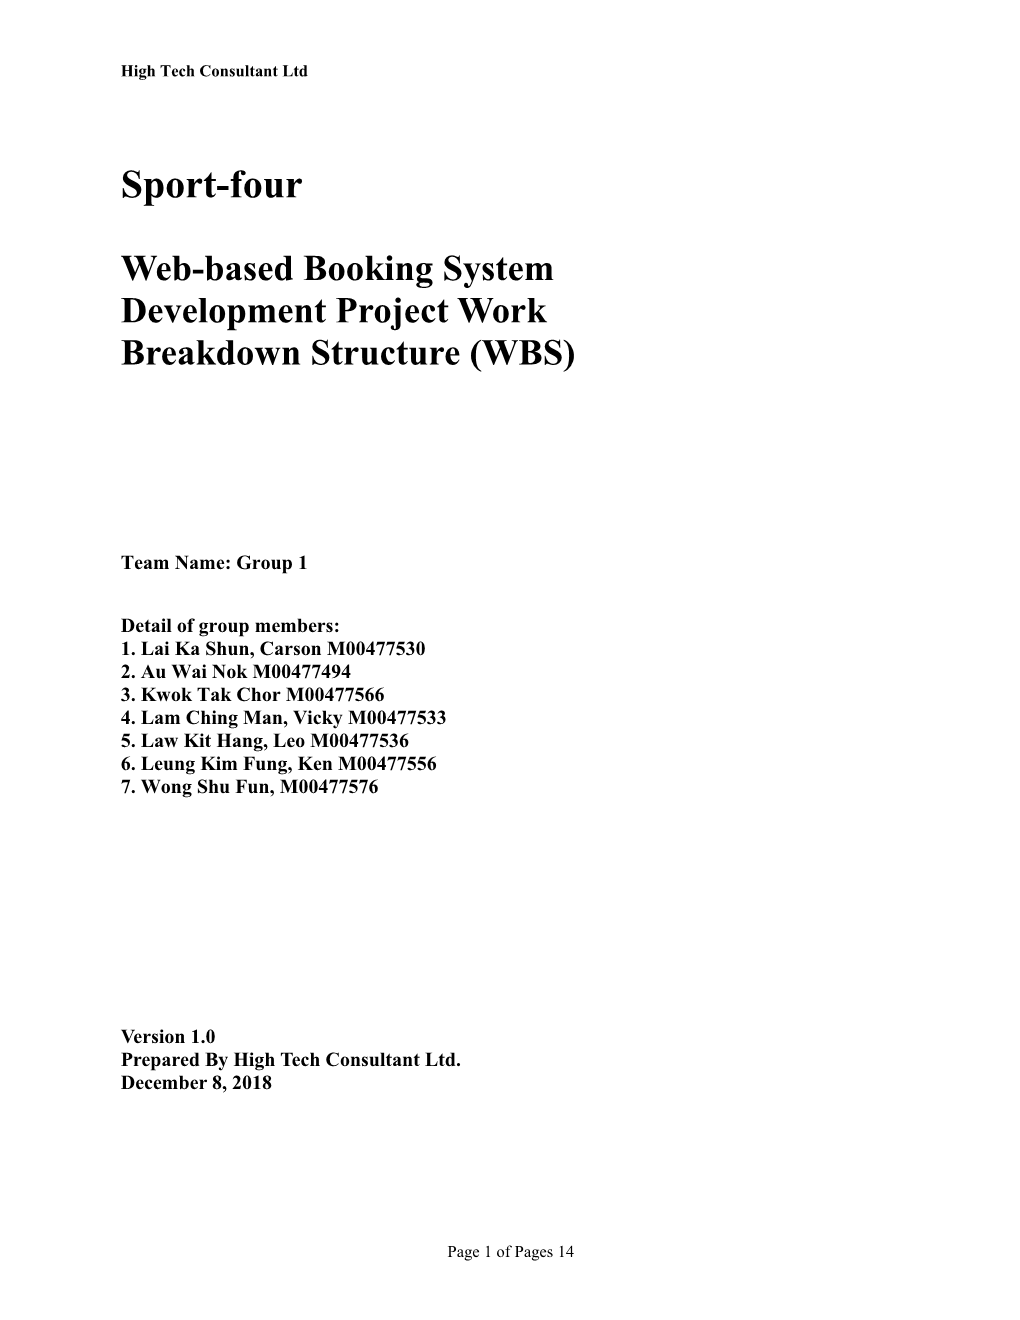 Work Breakdown Structure (WBS) Template